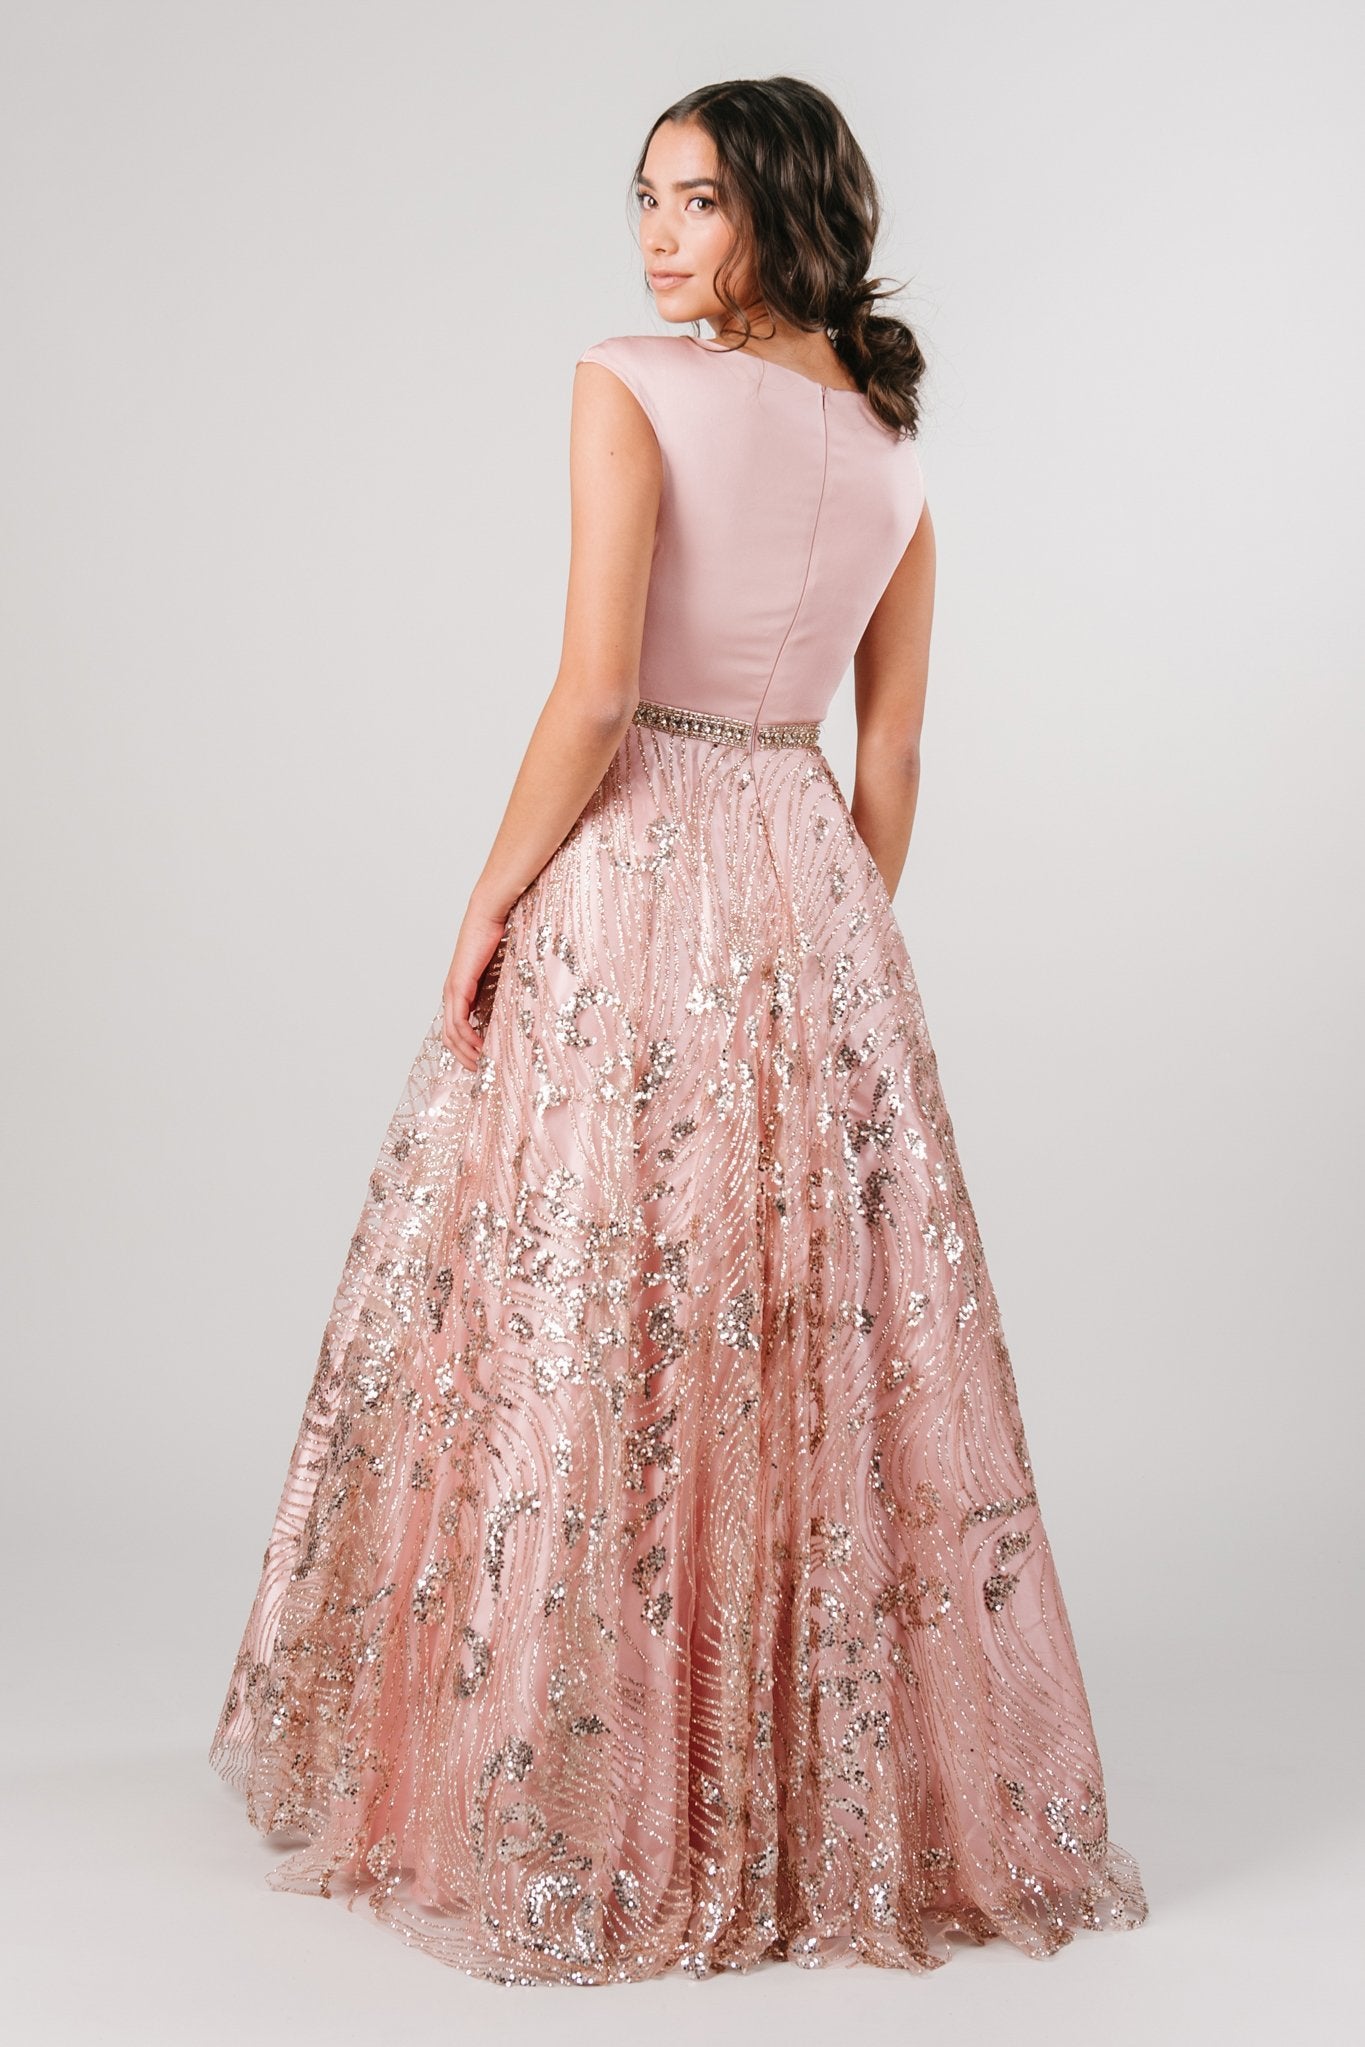 Modern Modest Prom Dresses : Makayla